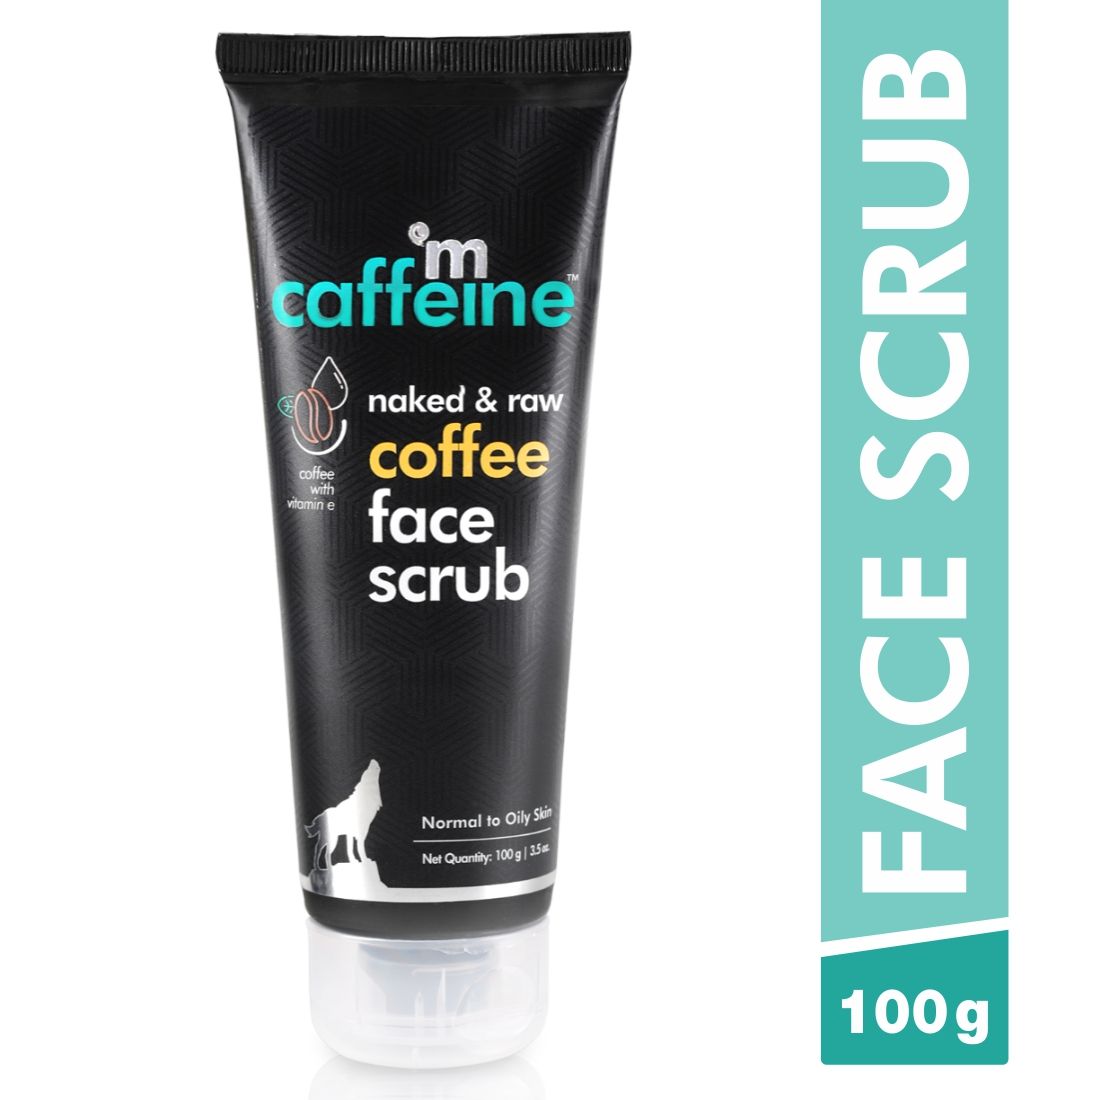 MCaffeine Exfoliating Coffee Face Scrub with Walnut & Vitamin E for Tan, Blackheads & Dirt Removal